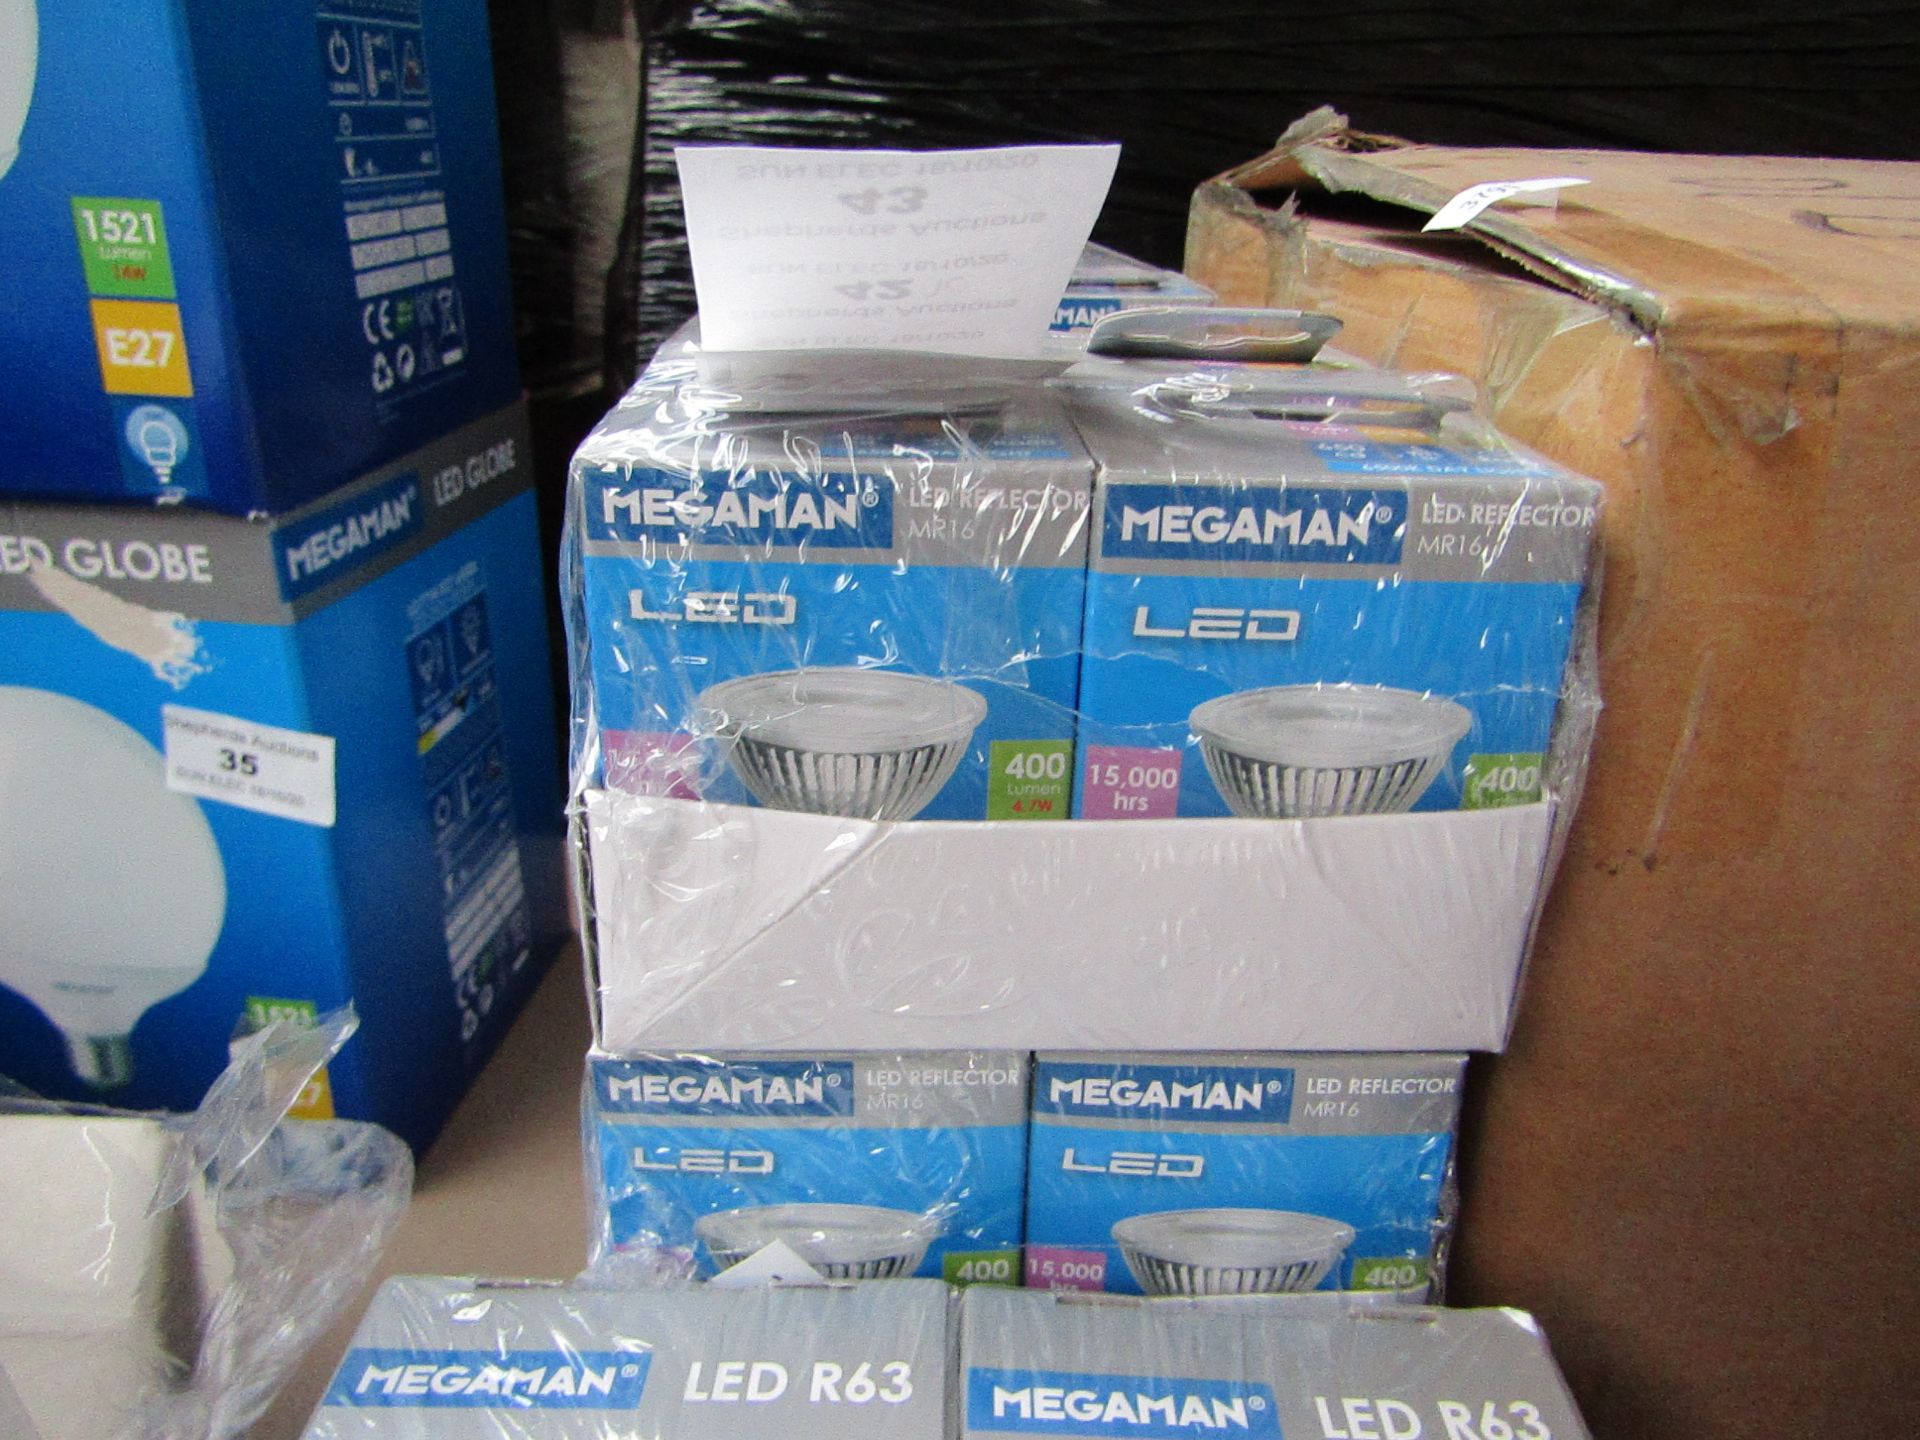 7x Megaman - LED Reflector MR16 Bulb, new and boxed. 15,000Hrs / GU5.3 / 400 Lumens